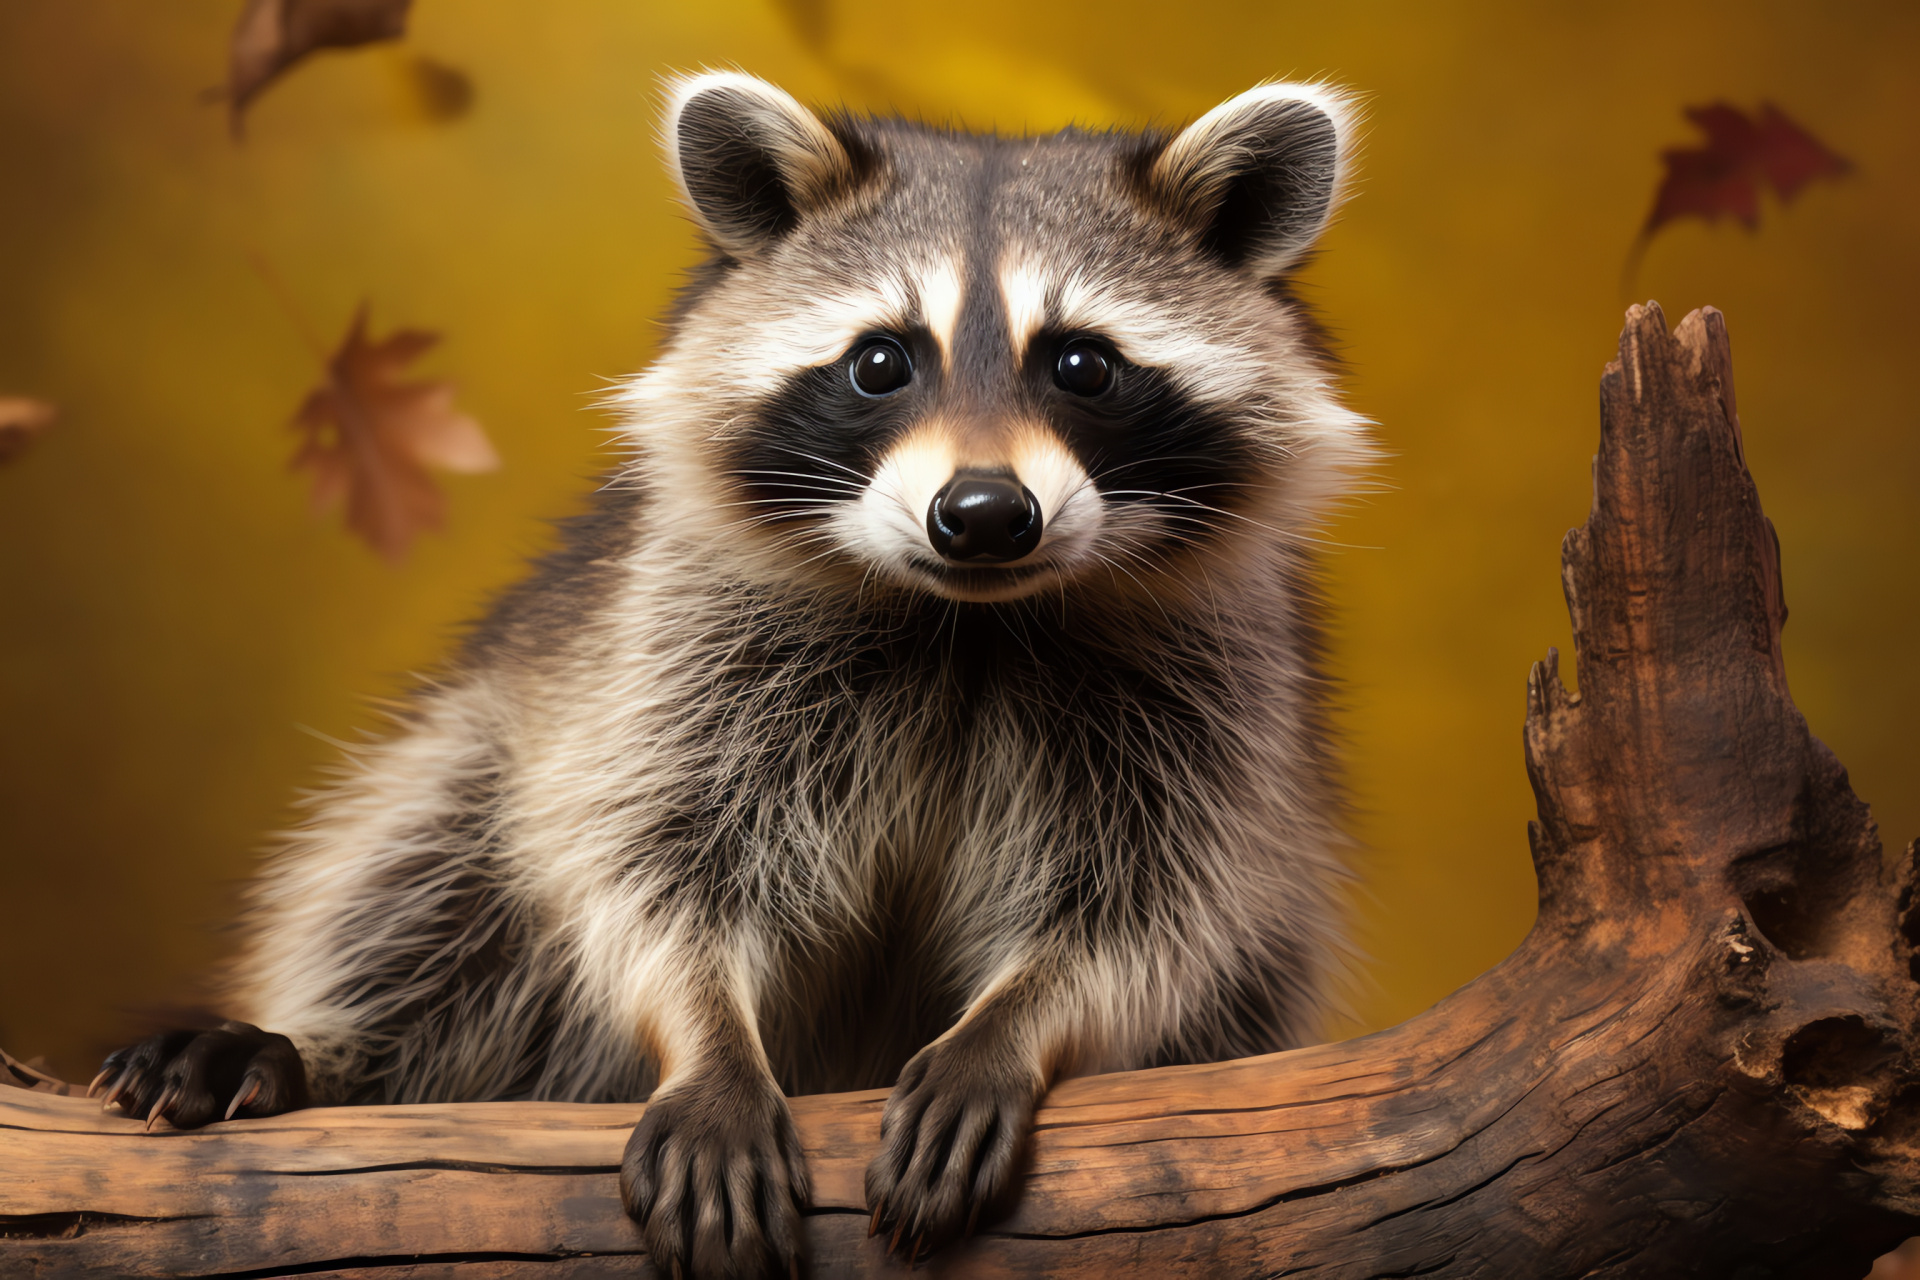 Raccoon distinctiveness, nocturnal bandit, animal adaptability, native fauna, curious observer, HD Desktop Image